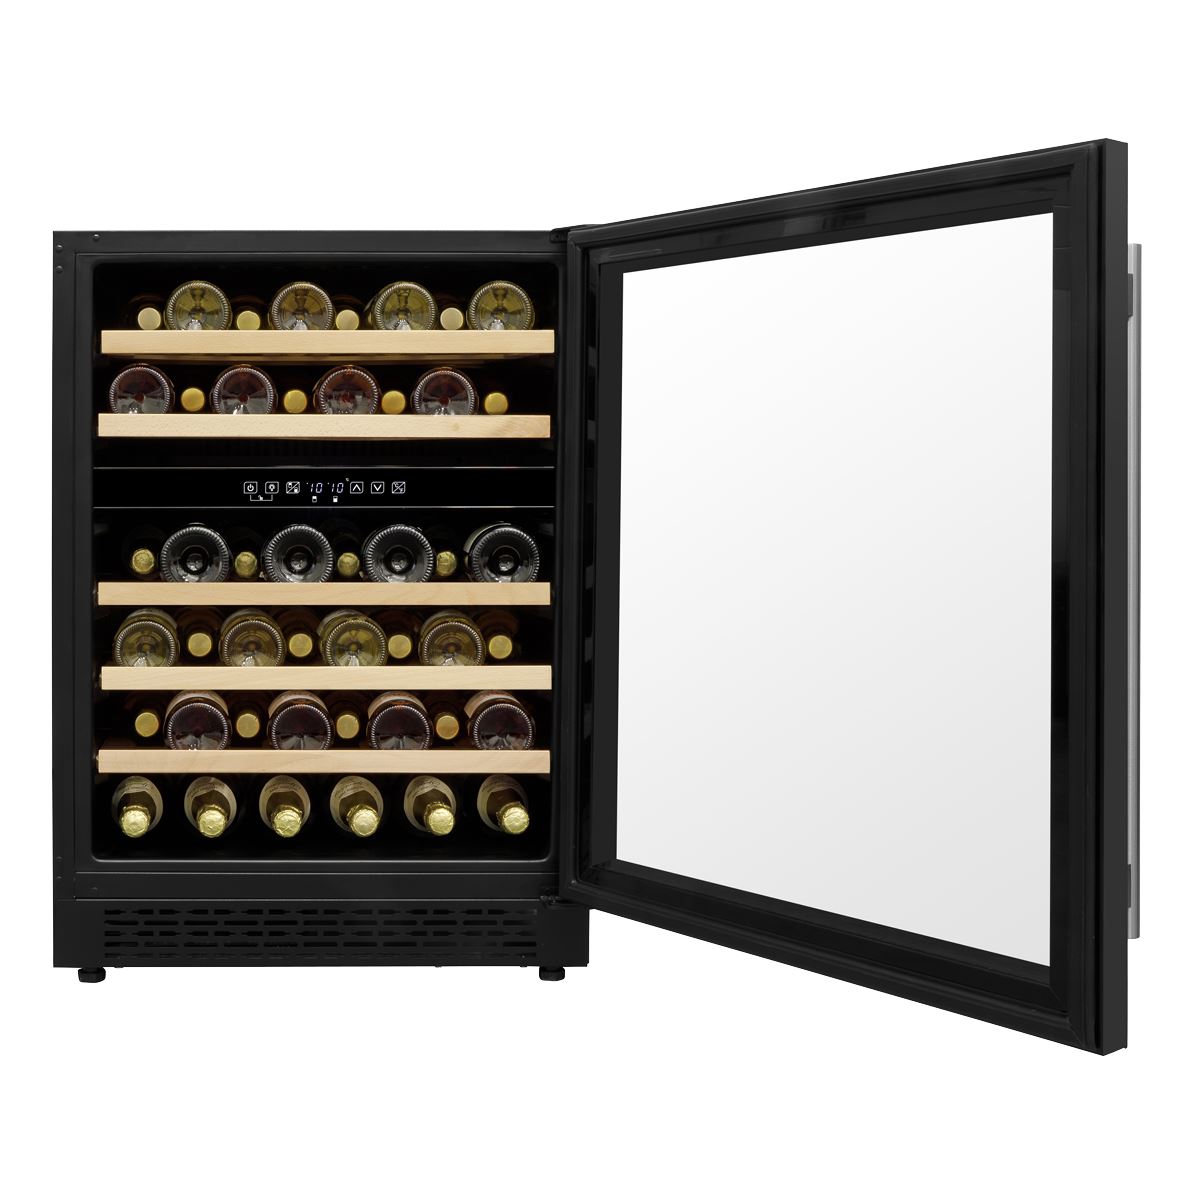 Baridi 46 Bottle Wine Cellar Fridge with Digital Touch Screen Controls, Black